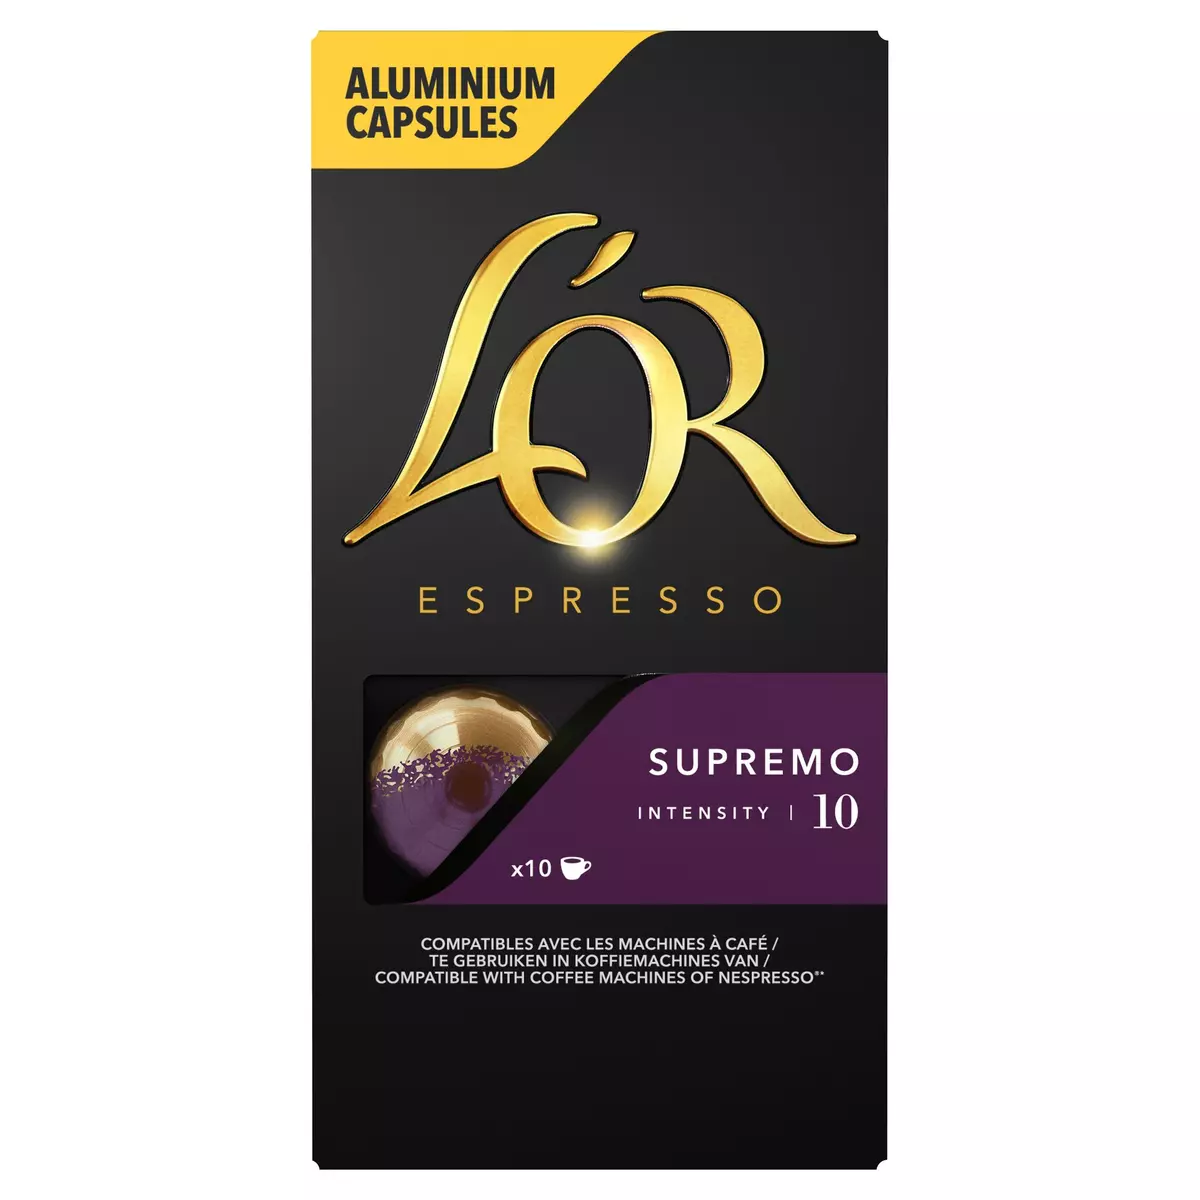 L'OR Capsules de café supremo intensité 10 compatibles Nespresso 10 capsules 52g